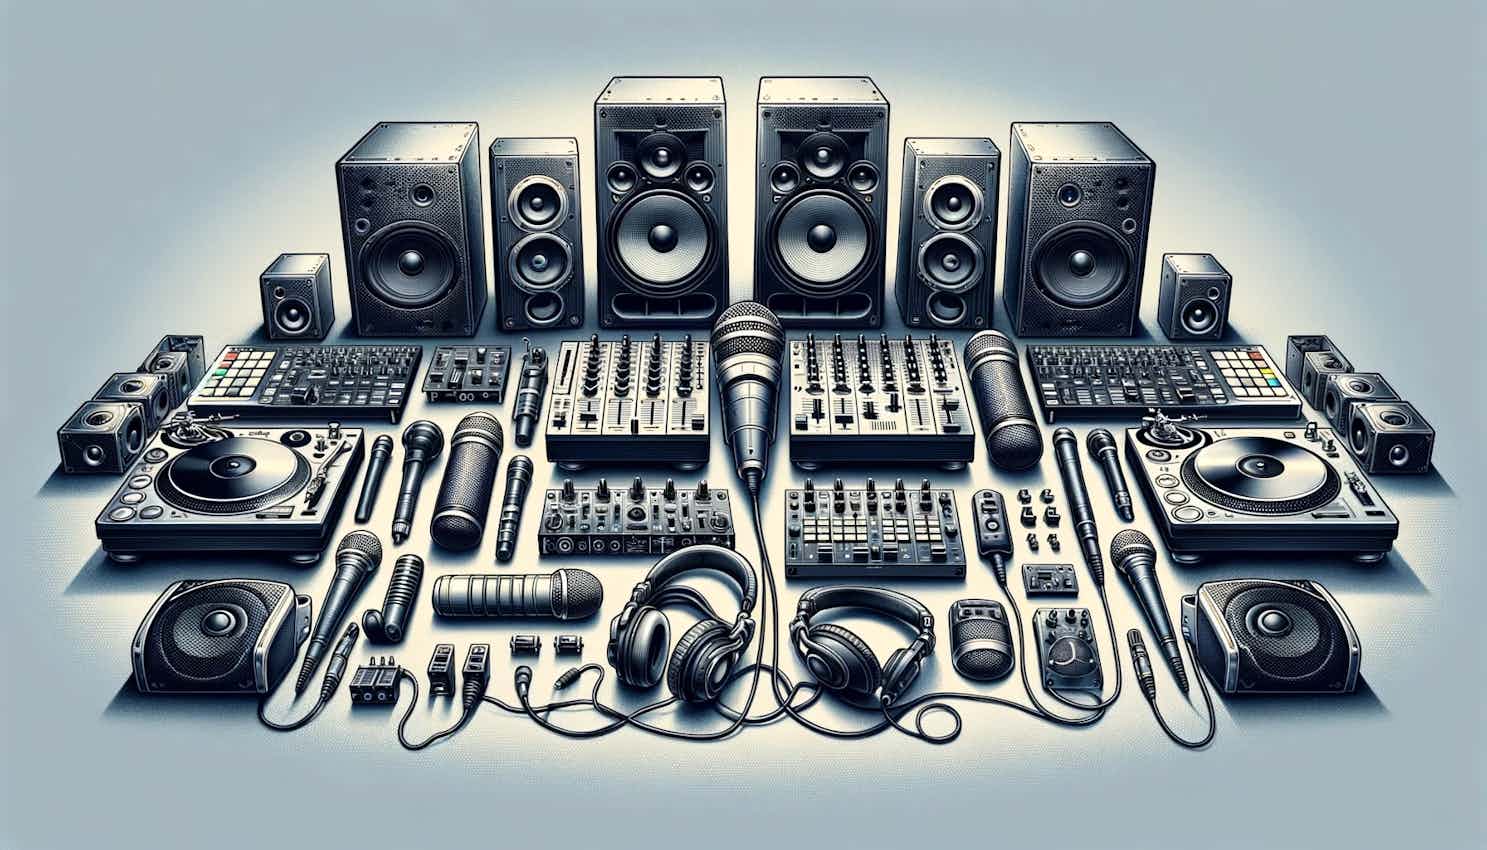 Universal DJ gear